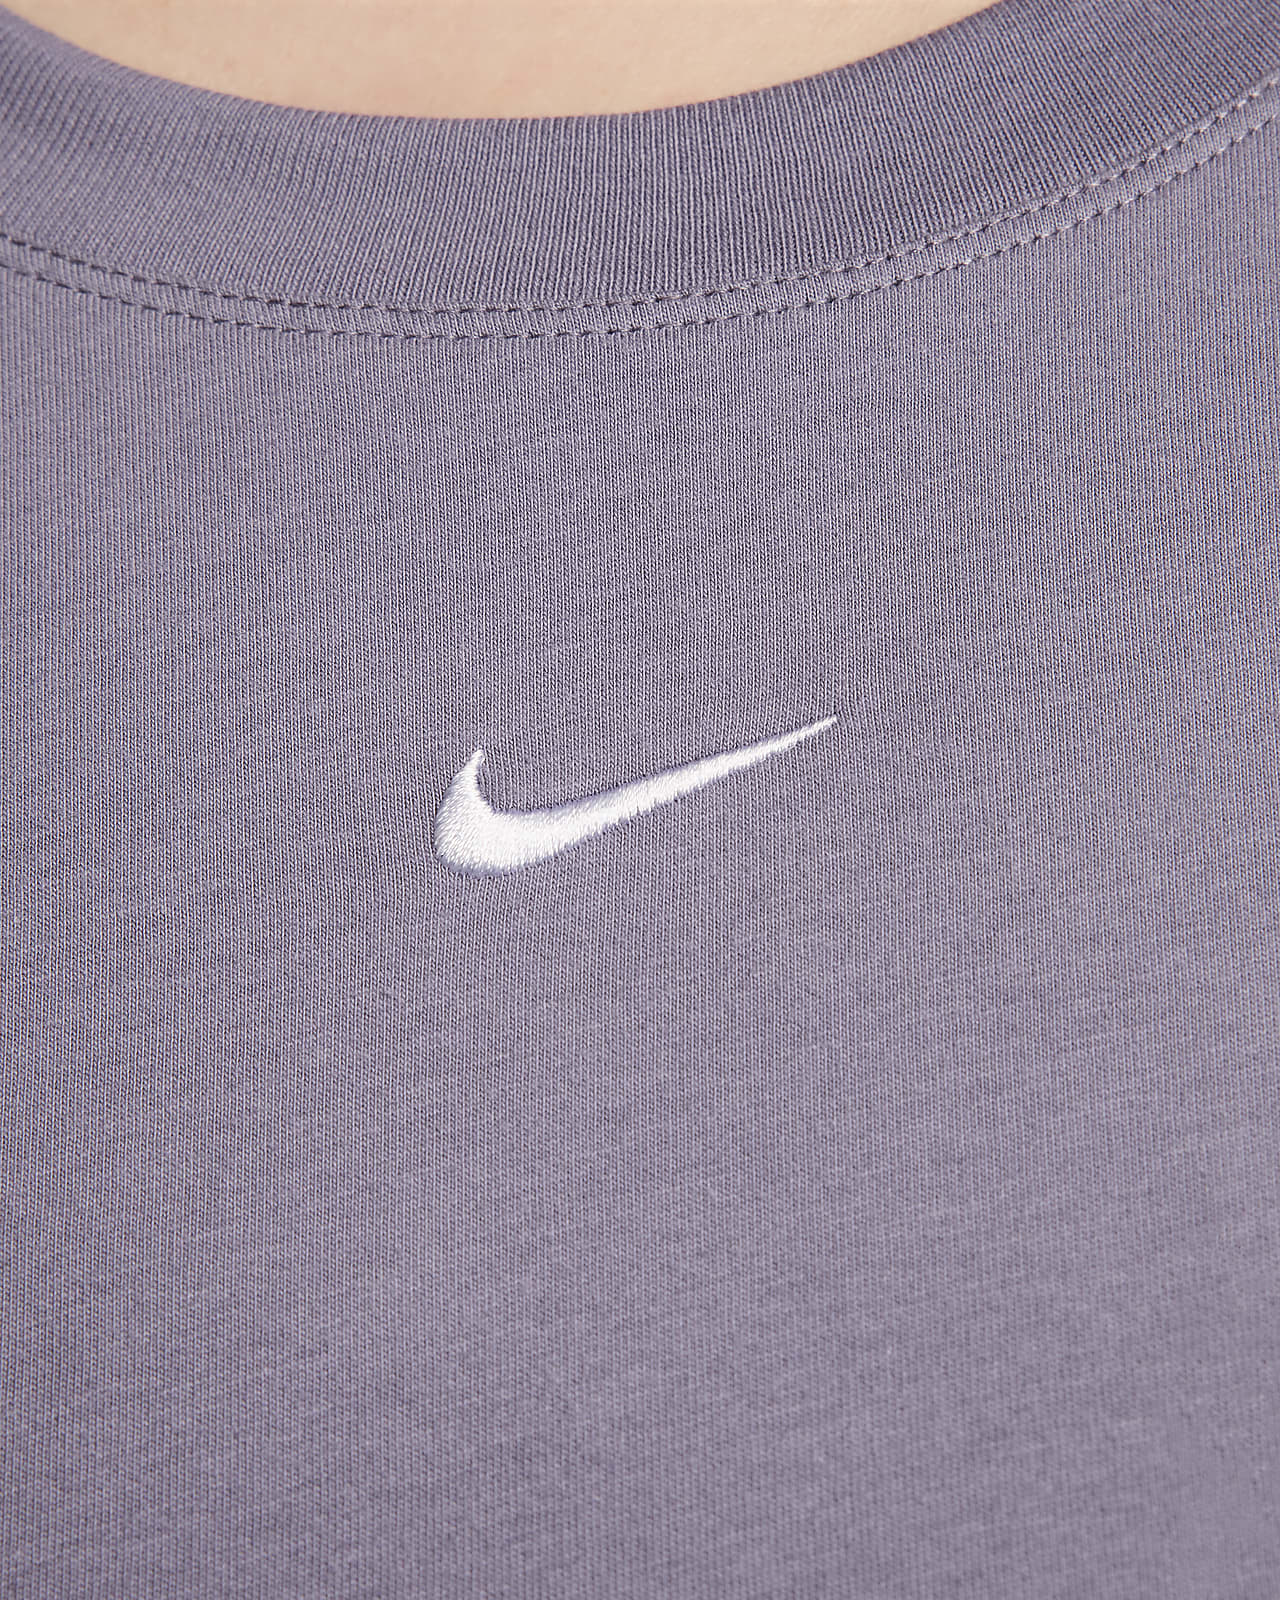 Nike Women's Sportswear Essential Logo T-Shirt, Plus Size 1X, Olive/White